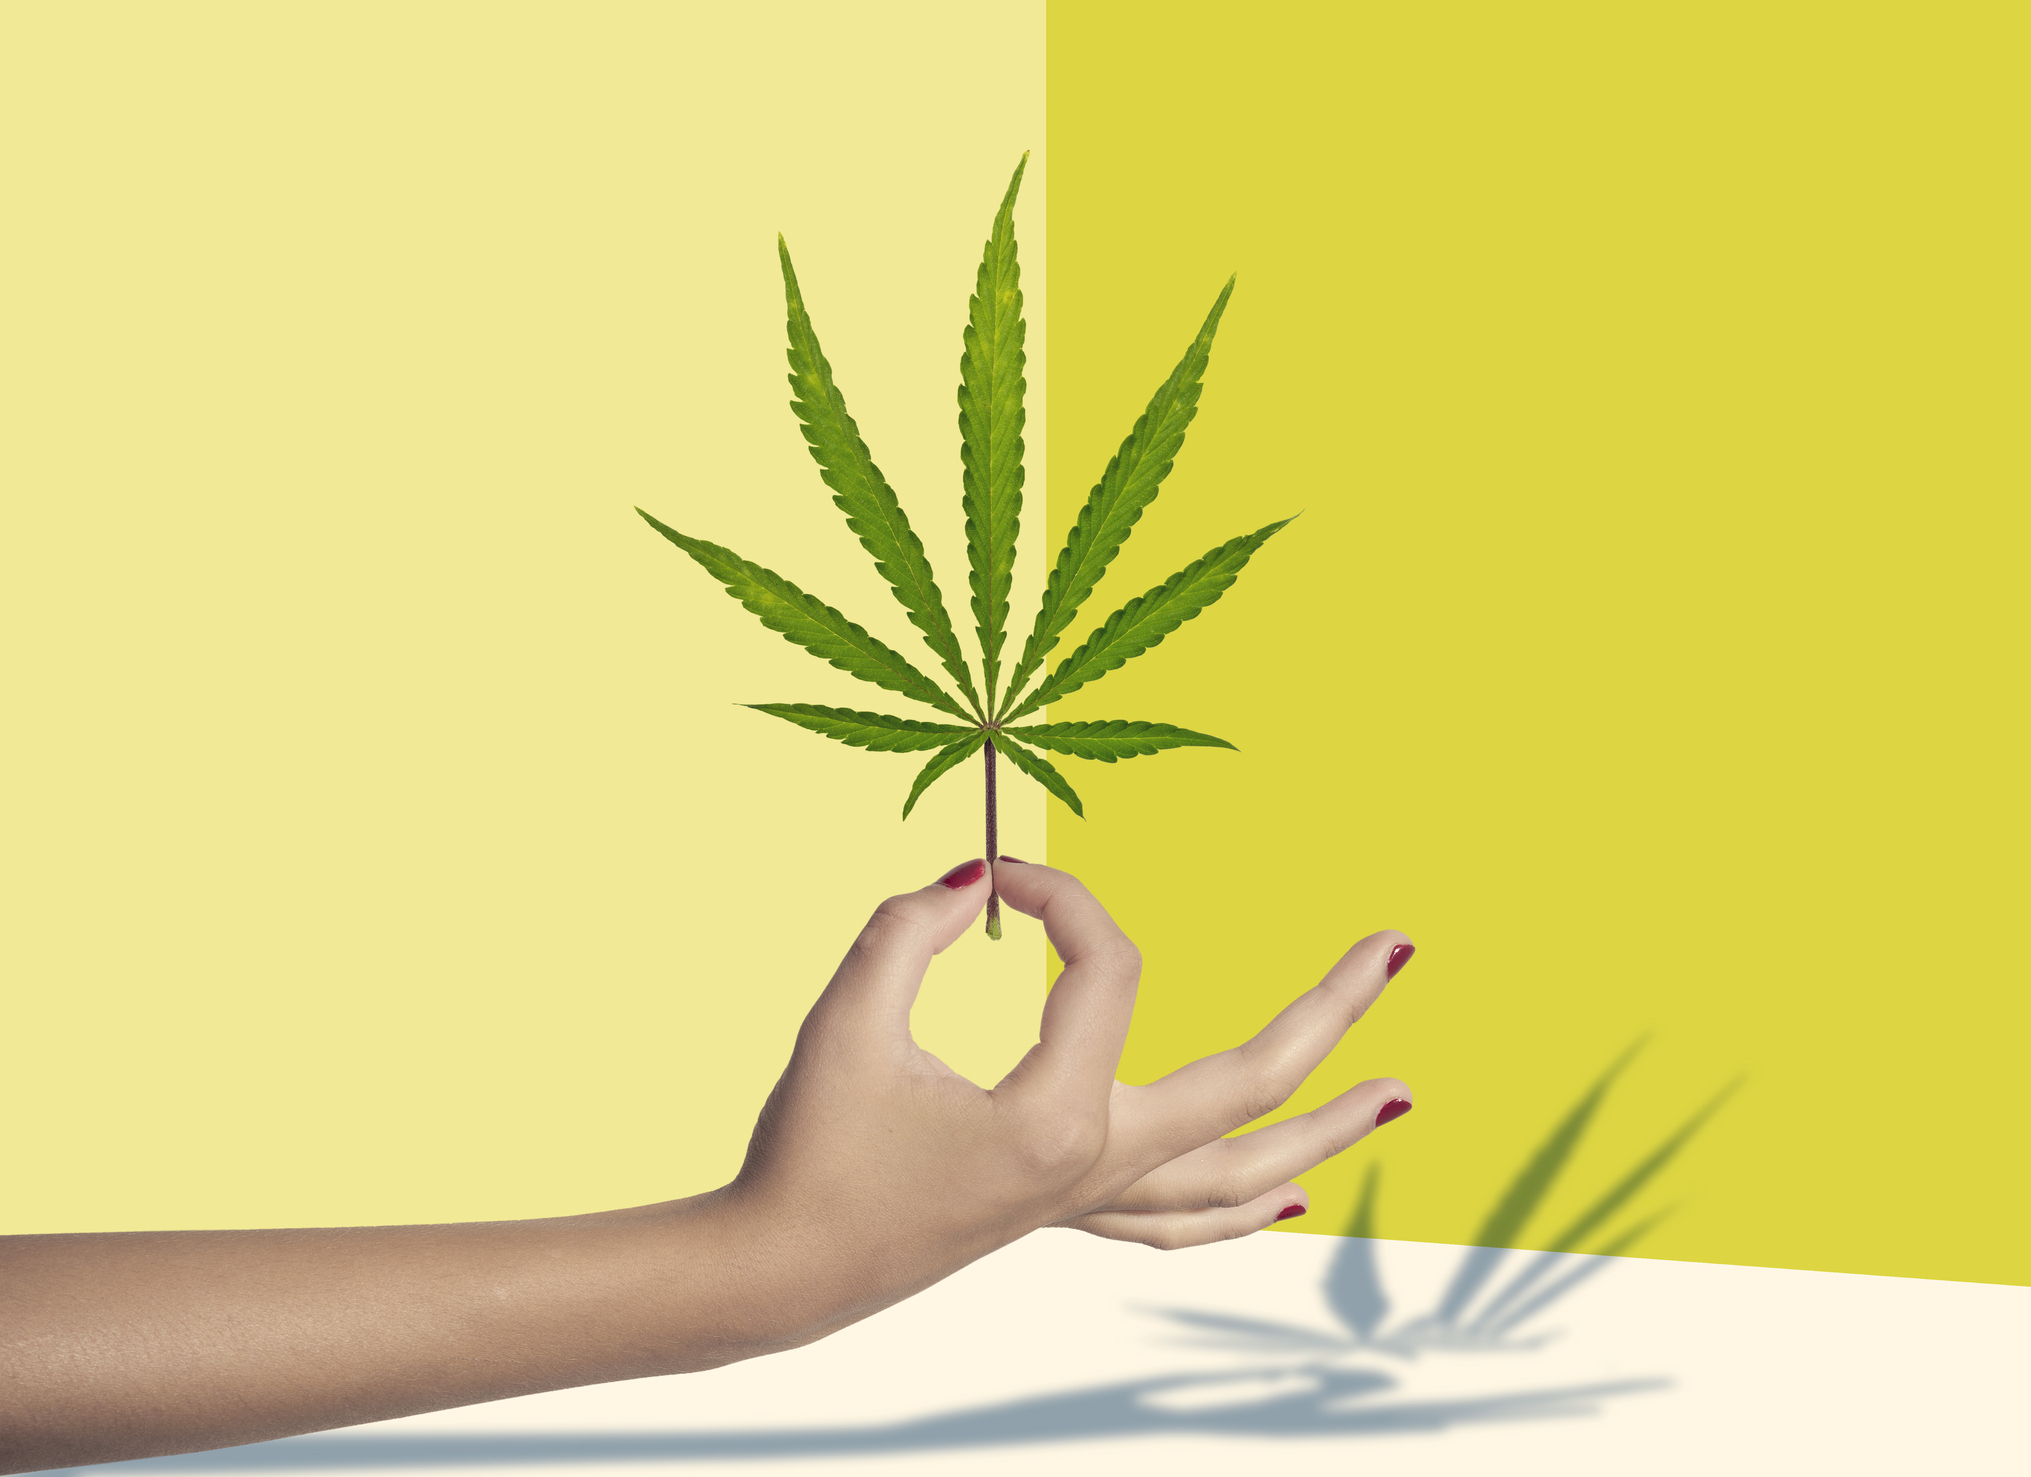 Did Researchers Find Cannabis Compound CBD May Prevent, Treat COVID-19?